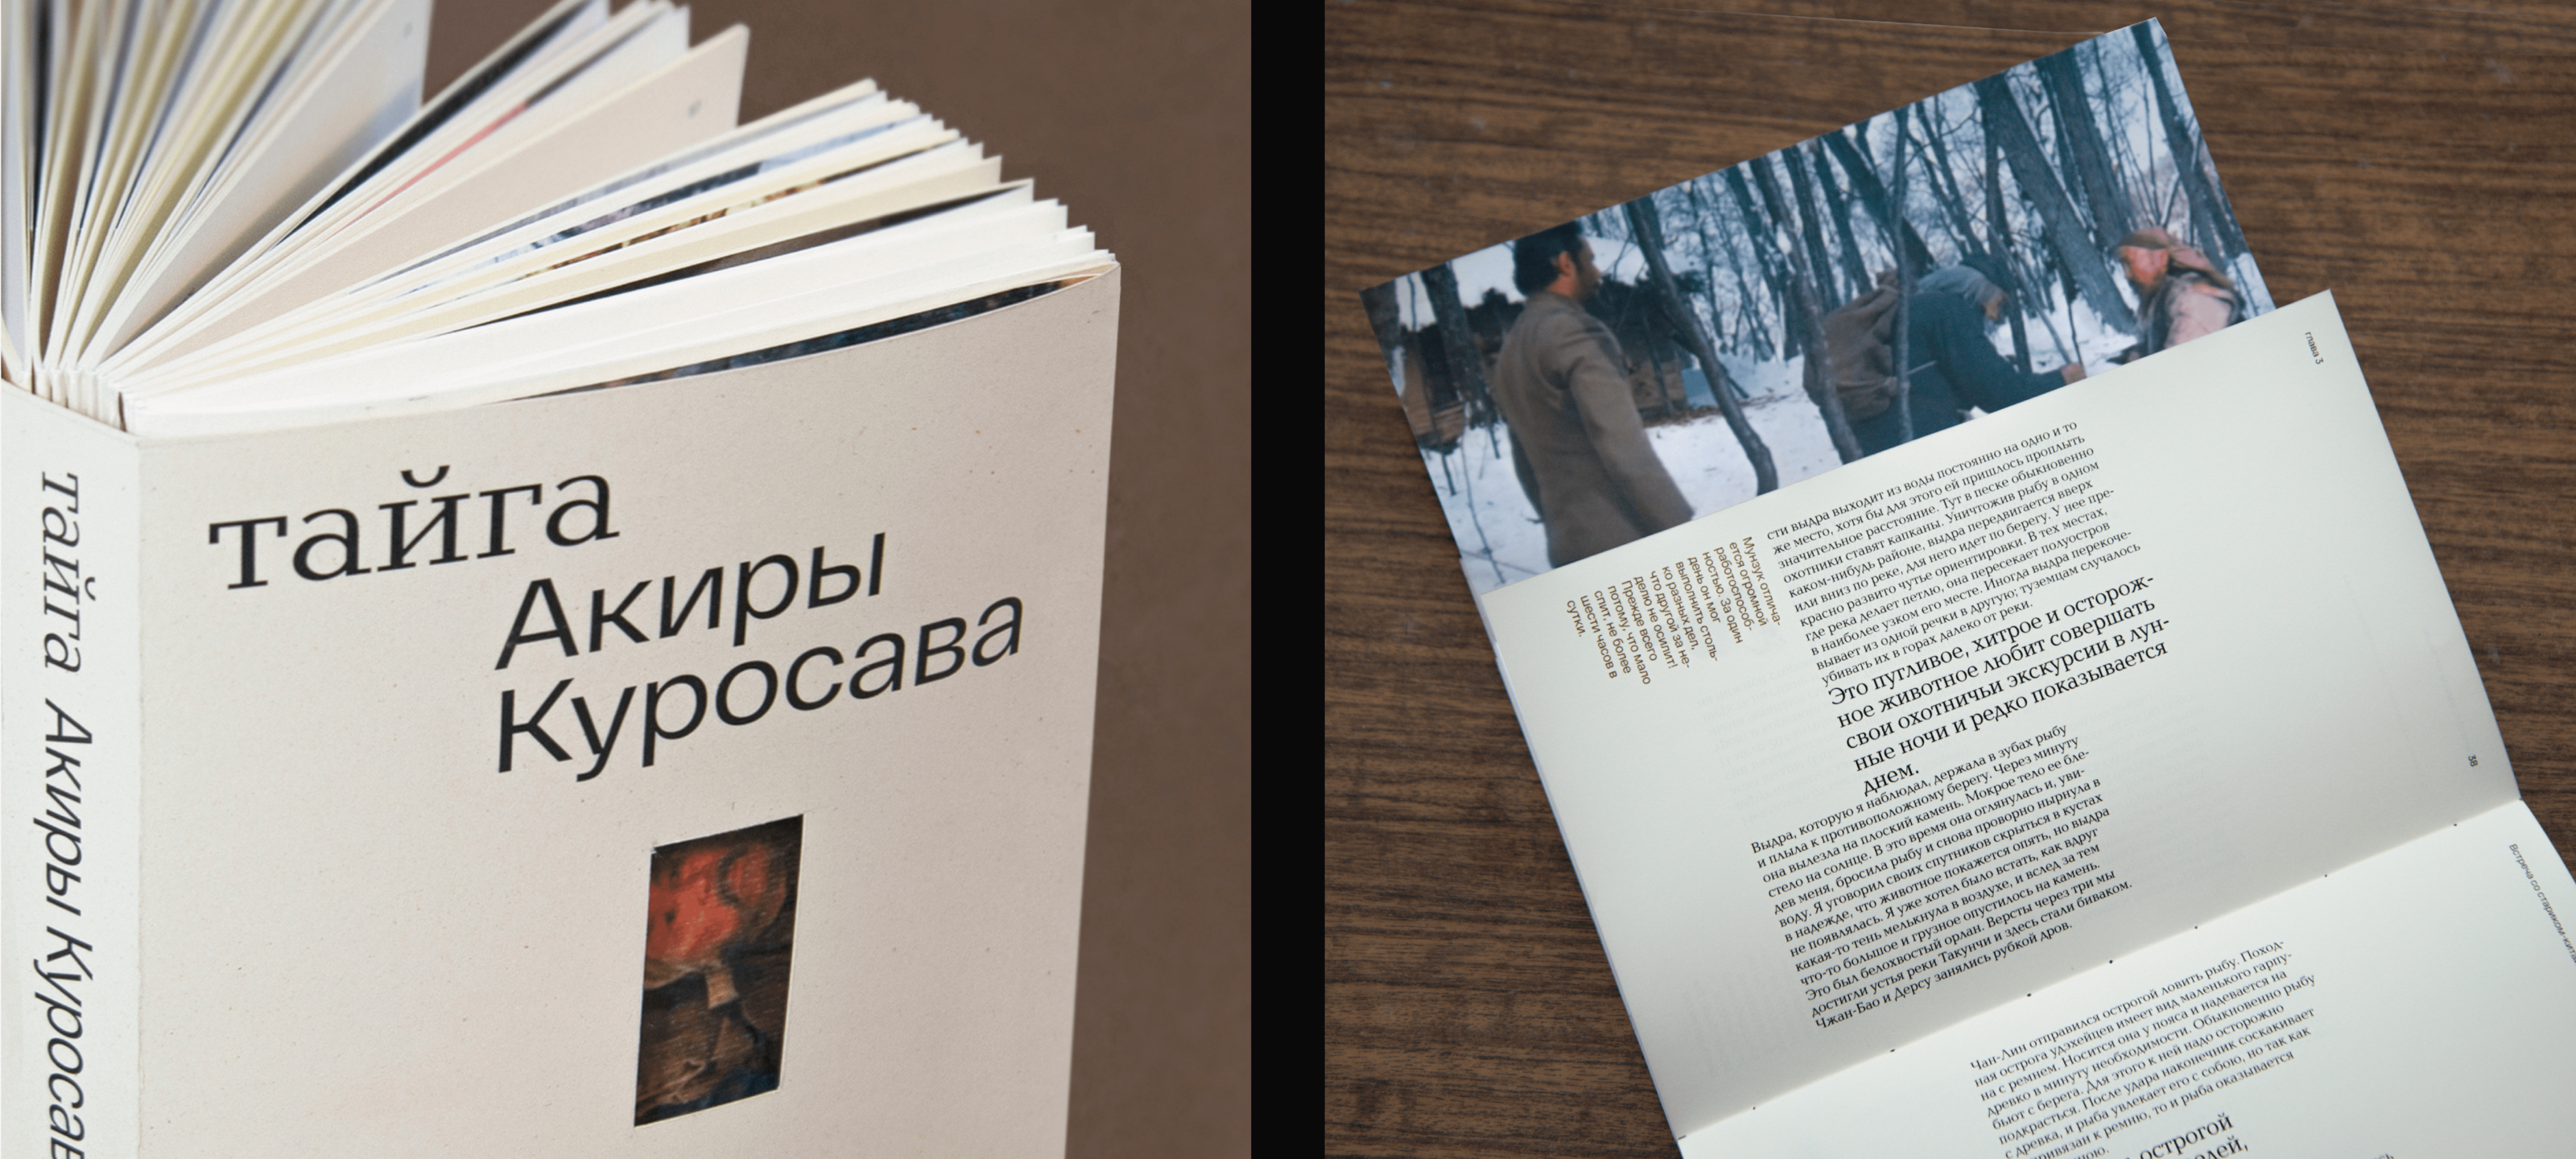 Тайга Акиры Куросава (книга) — Изображение №8 — Брендинг, Графика на Dprofile